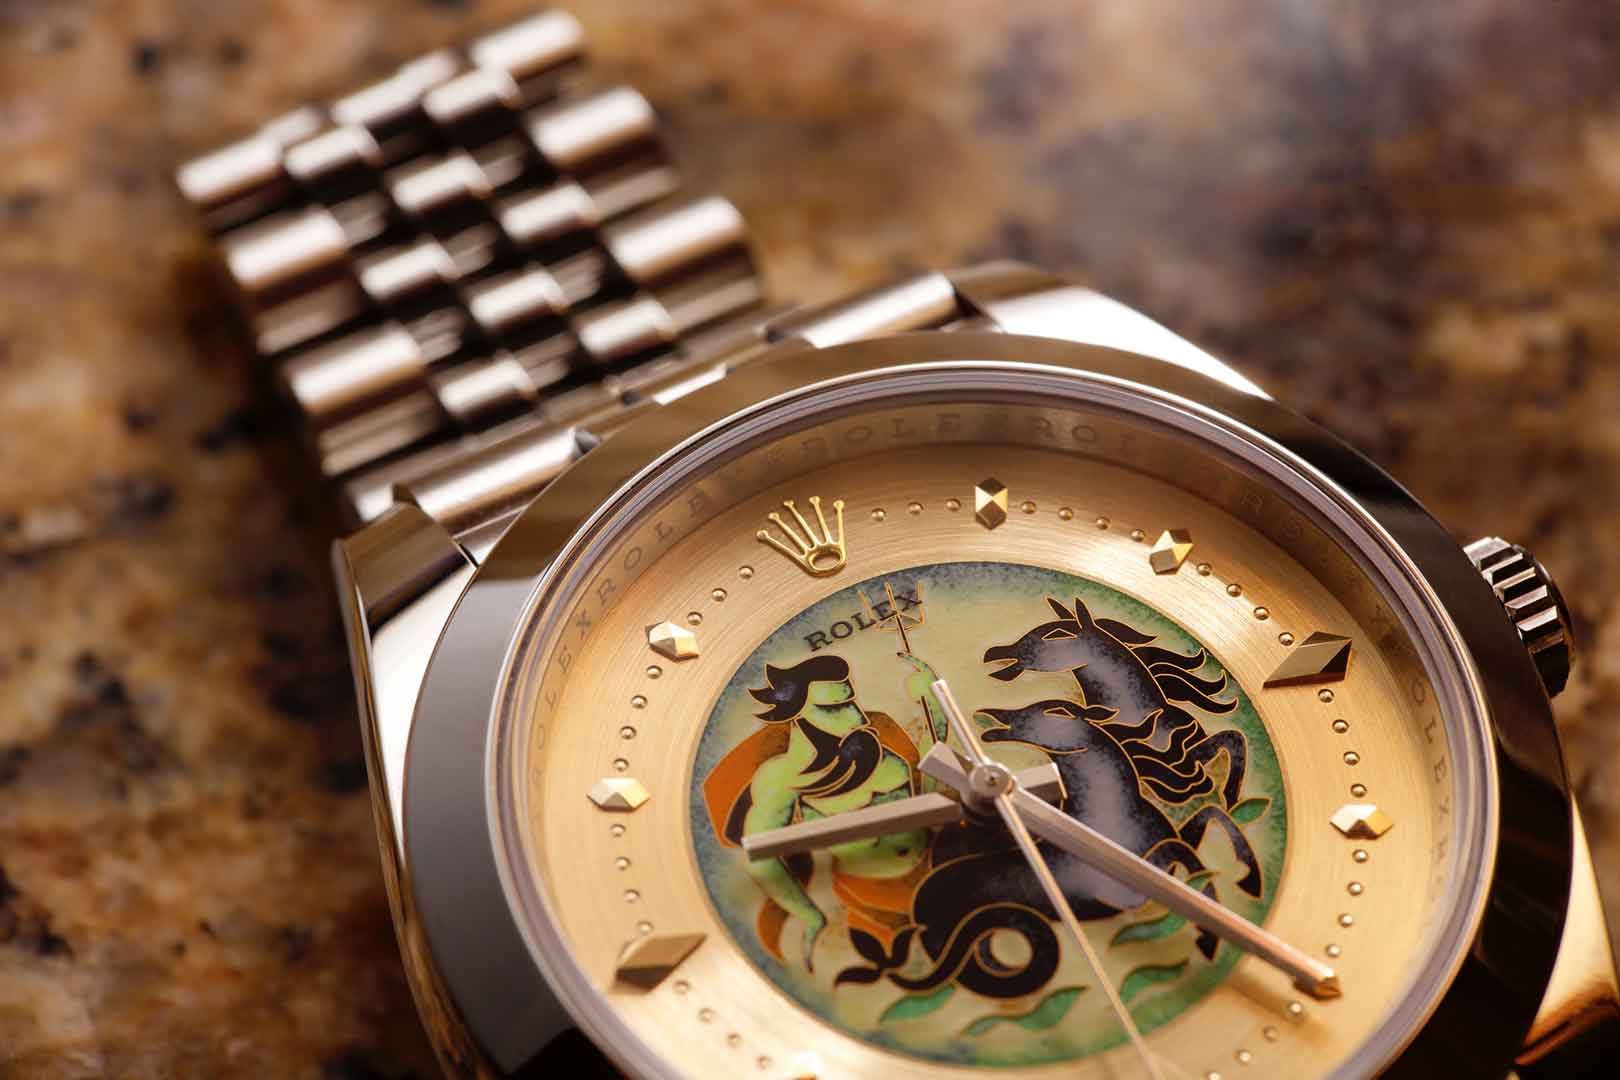 Ematelier's enamel Rolex dials.